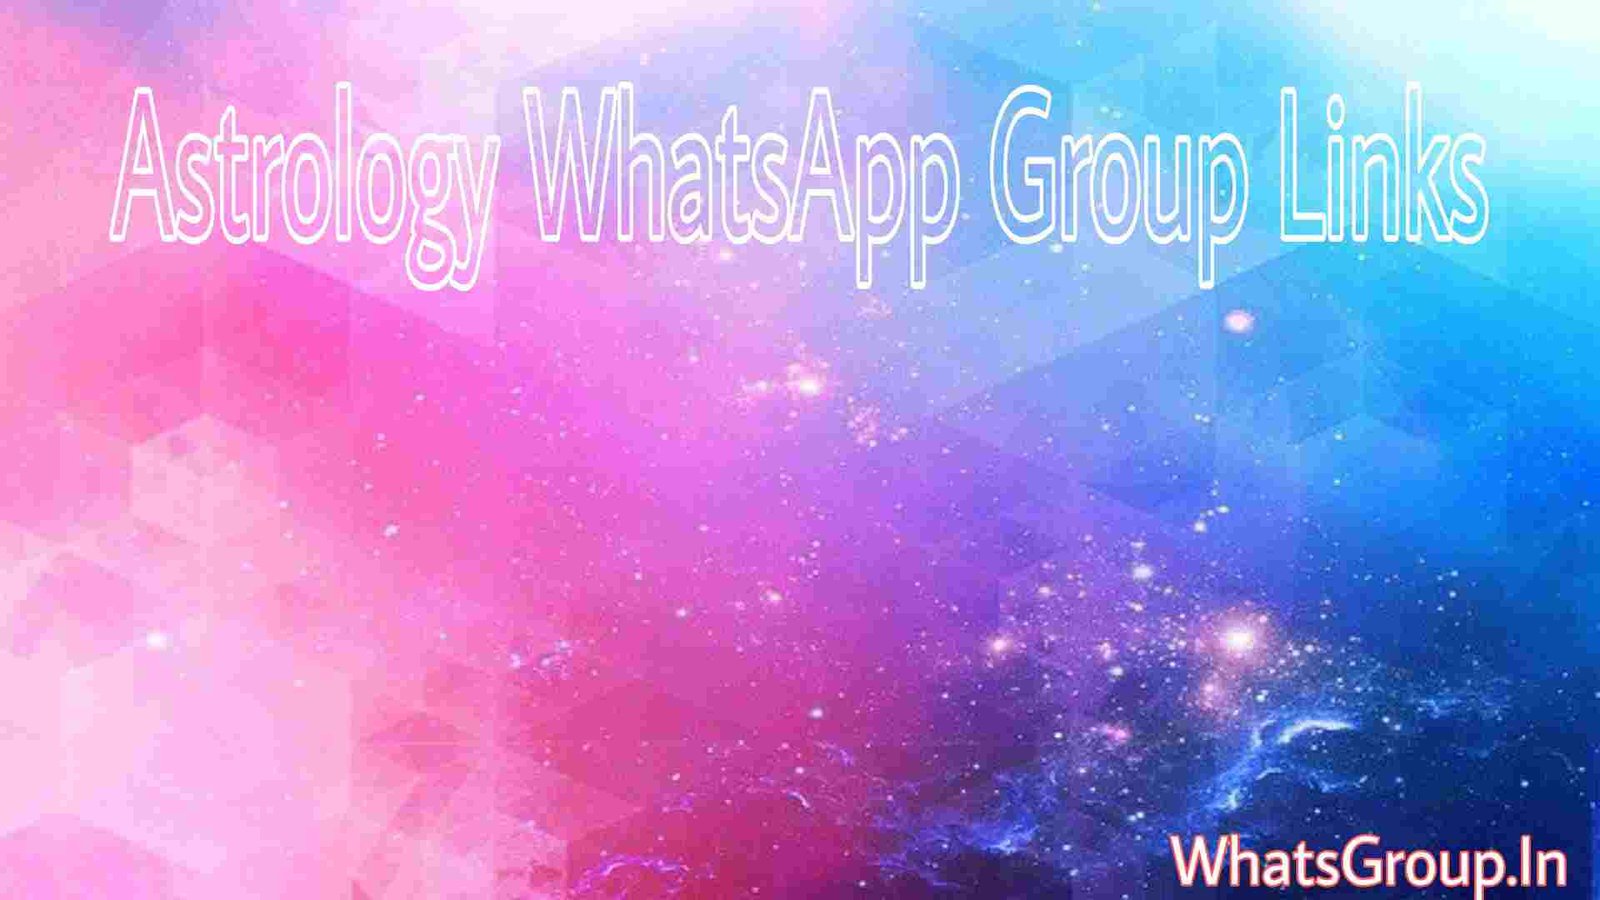 Astrology WhatsApp Group Links